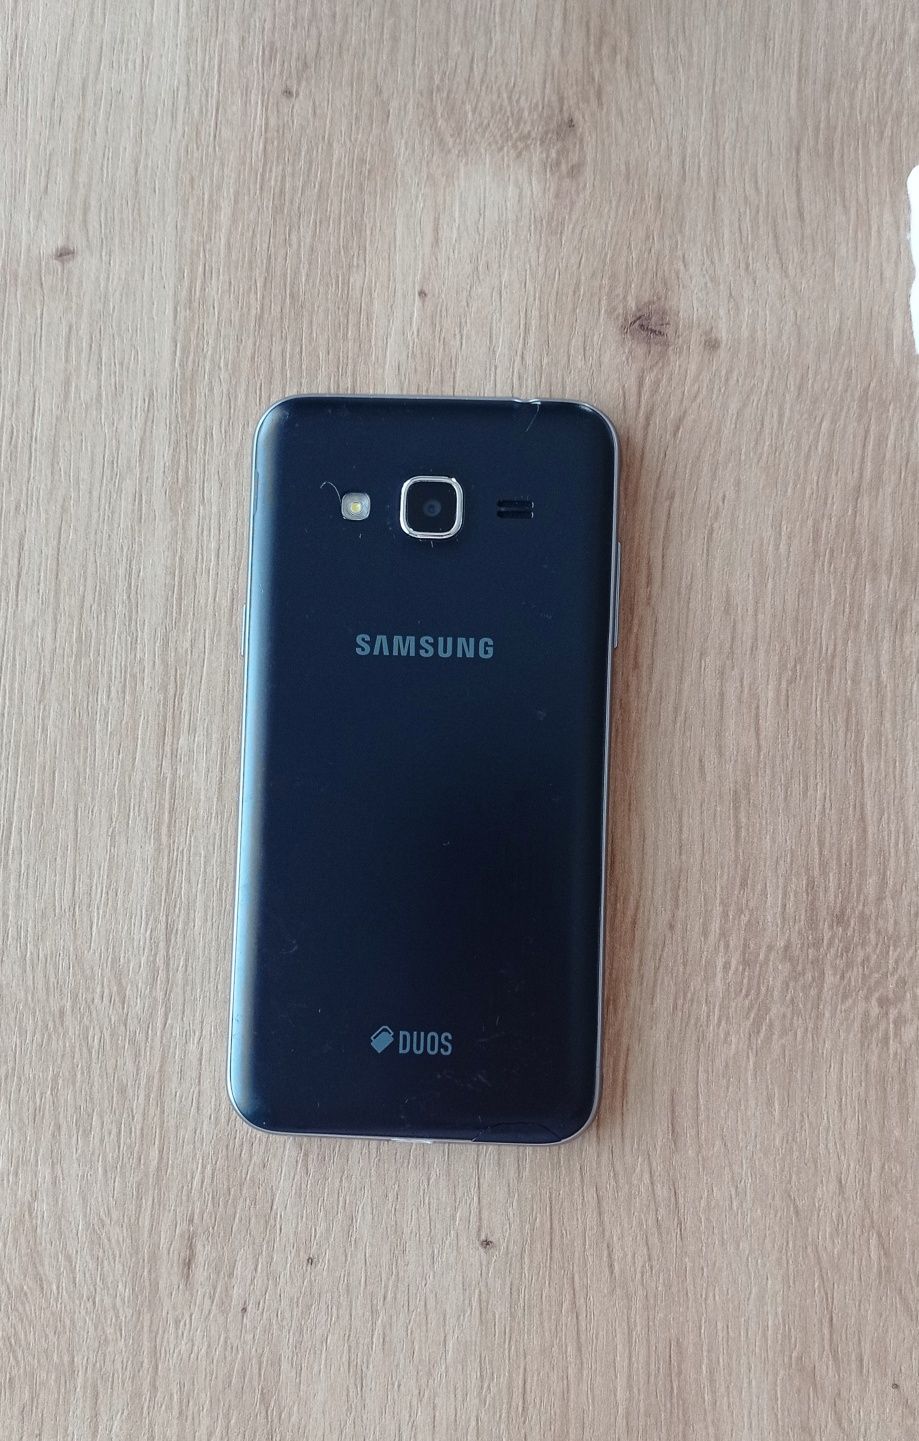 Samsung Galaxy J3 Dual SIM